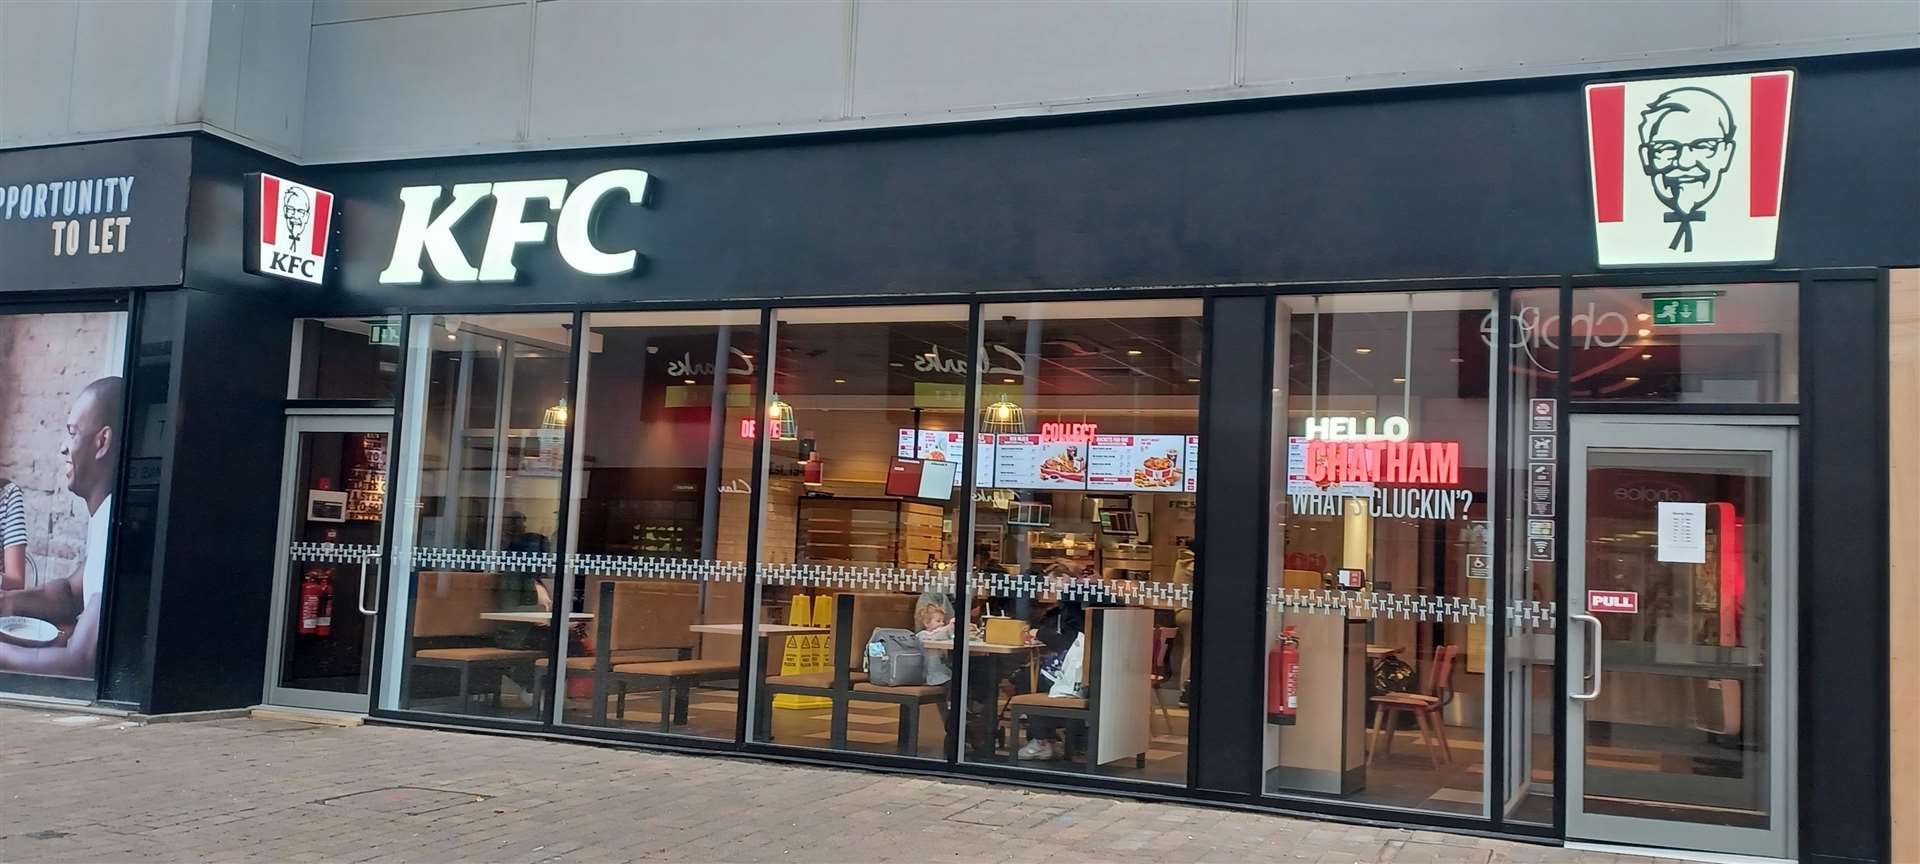 KFC has opened at Chatham Dockside (54486130)